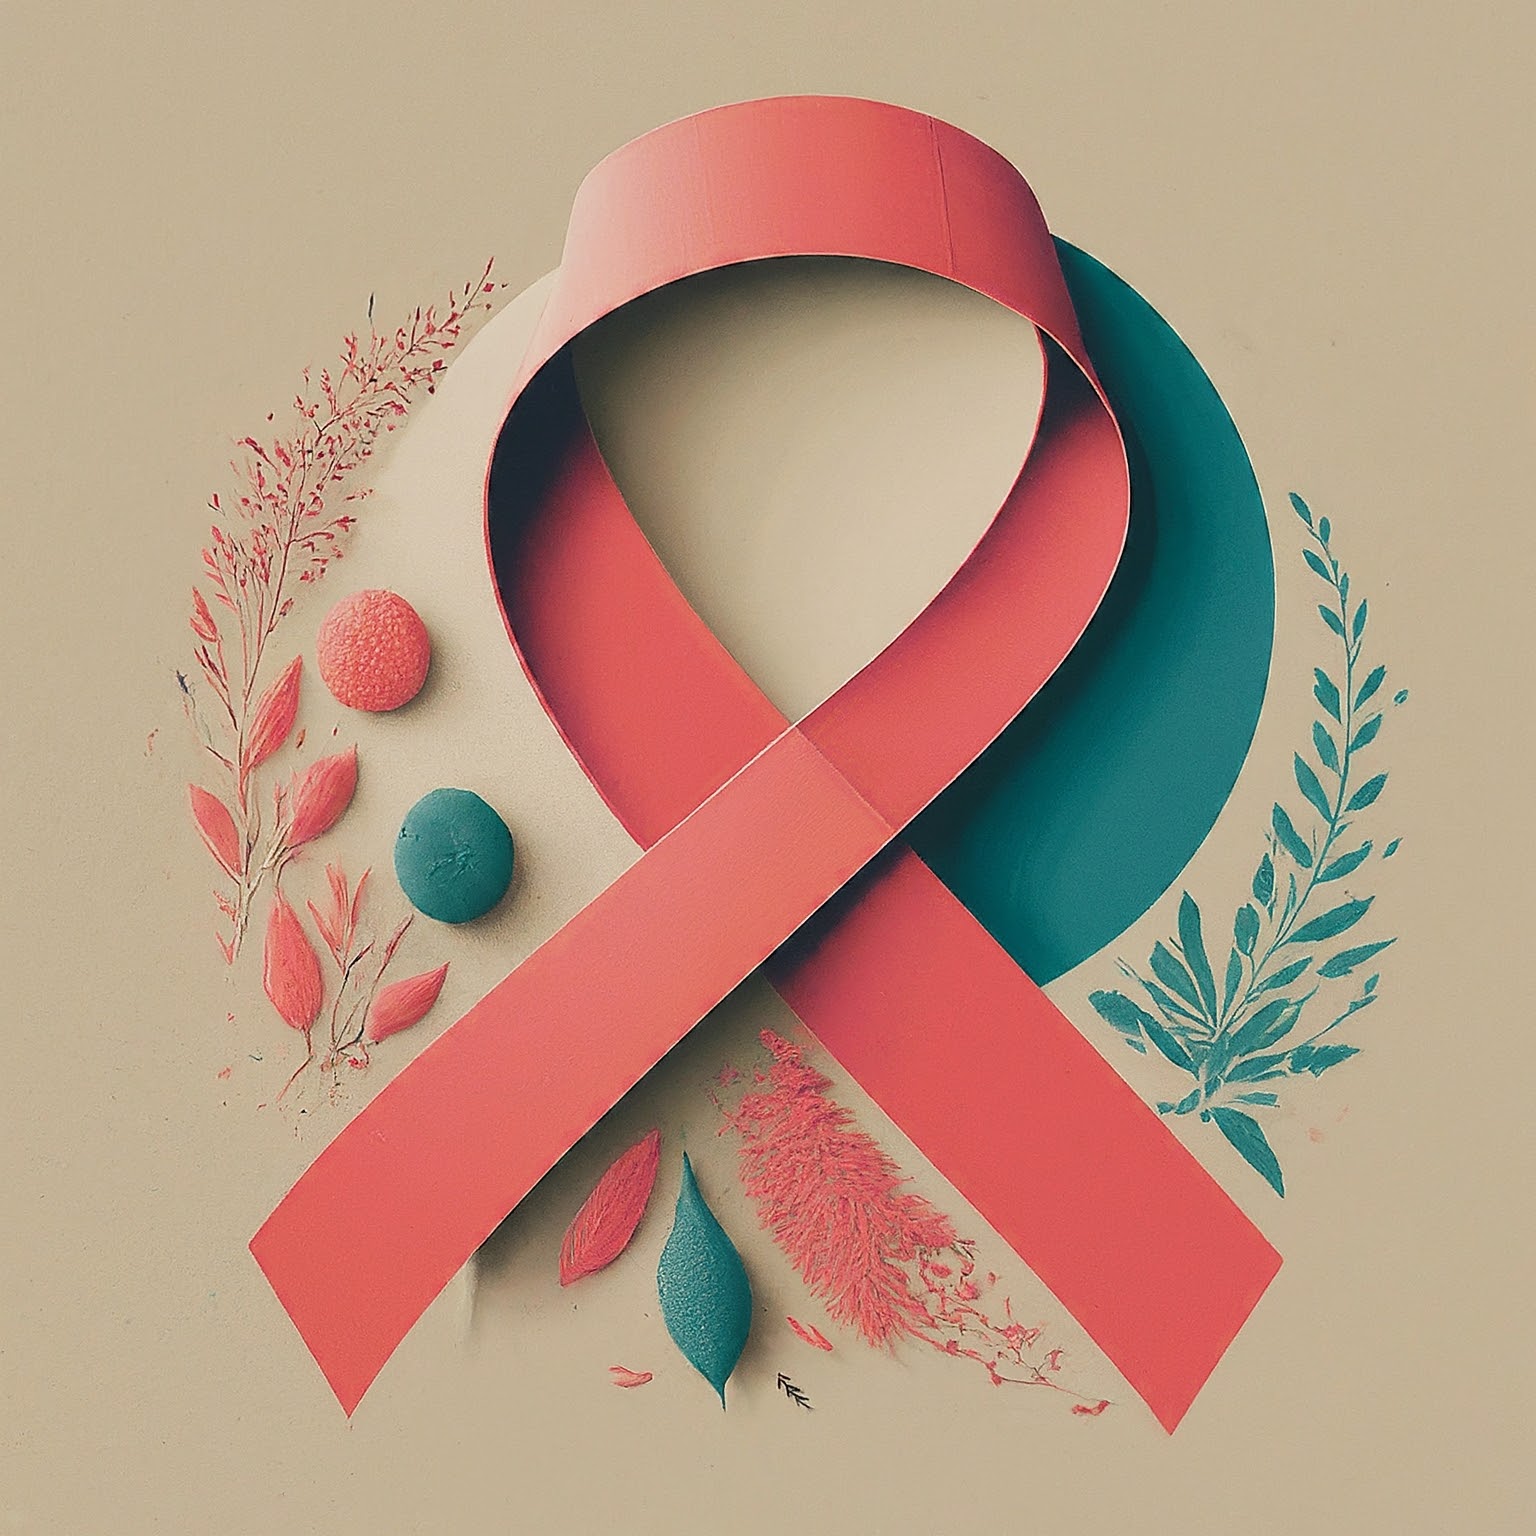 World aids day symbol